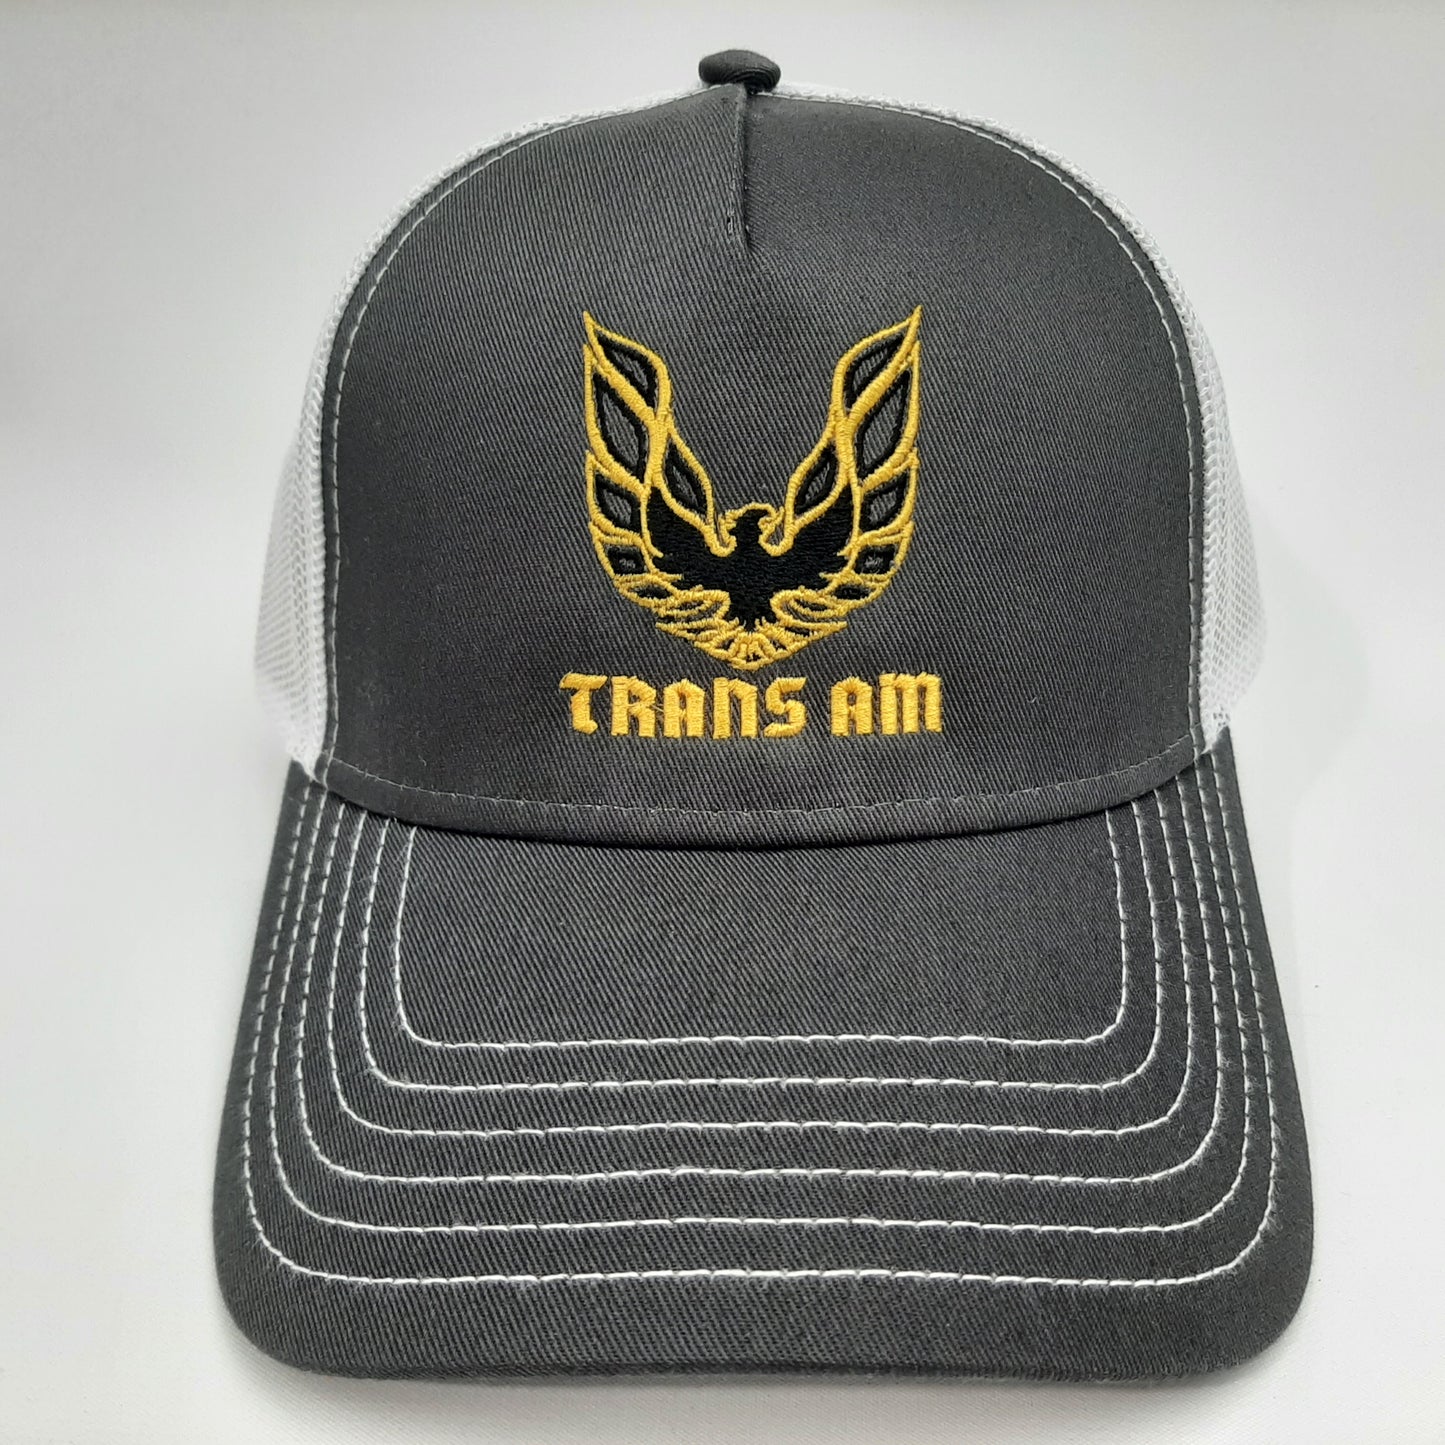 Trans Am Firebird Trucker Mesh Snapback Curved Bill Hat Cap Charcoal White